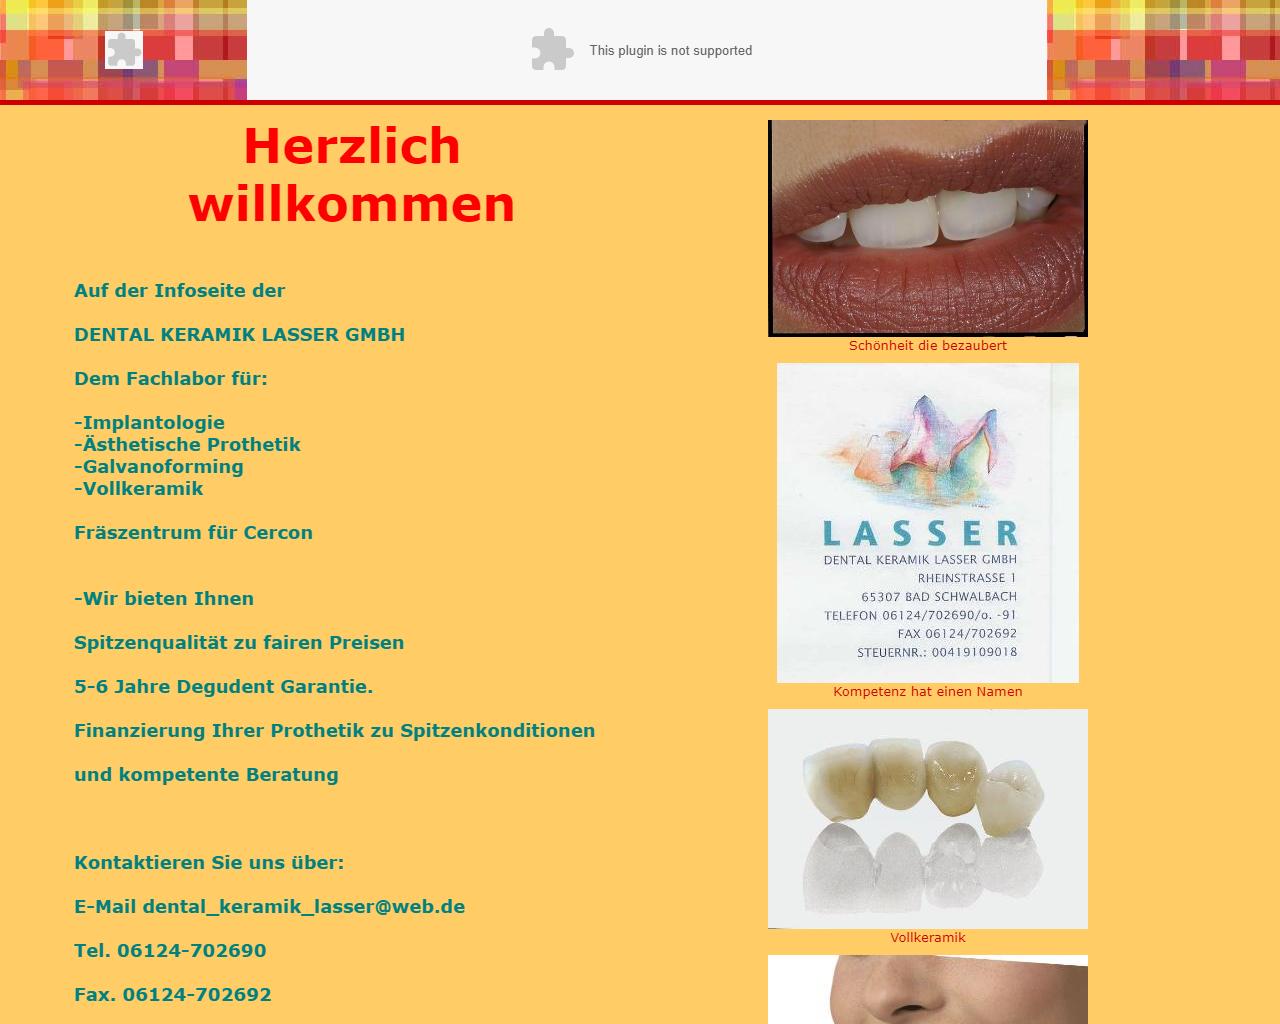 Dental Keramik Lasser